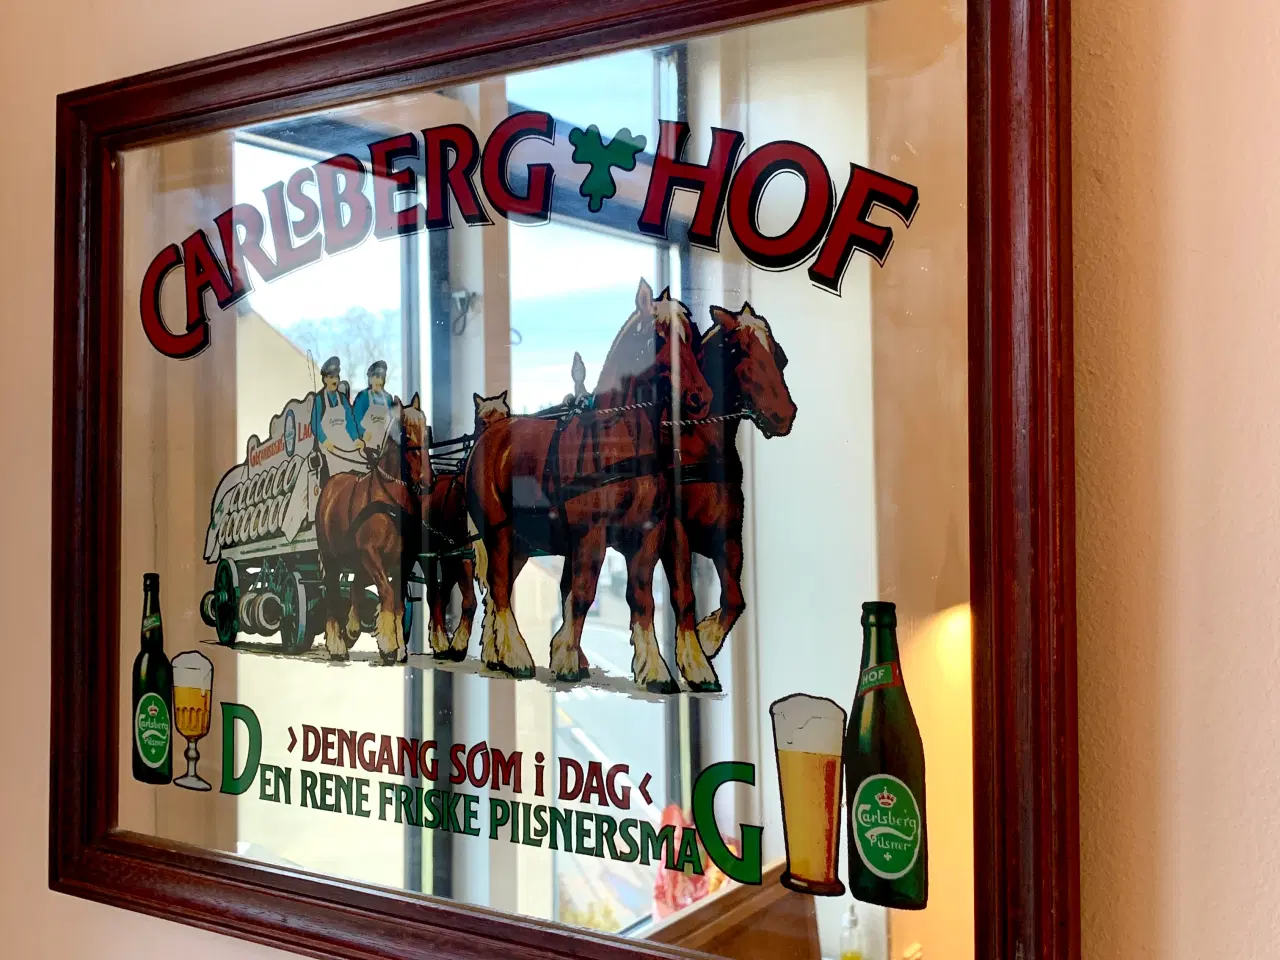 Billede 2 - Carlsberg hof - reklame øl spejl